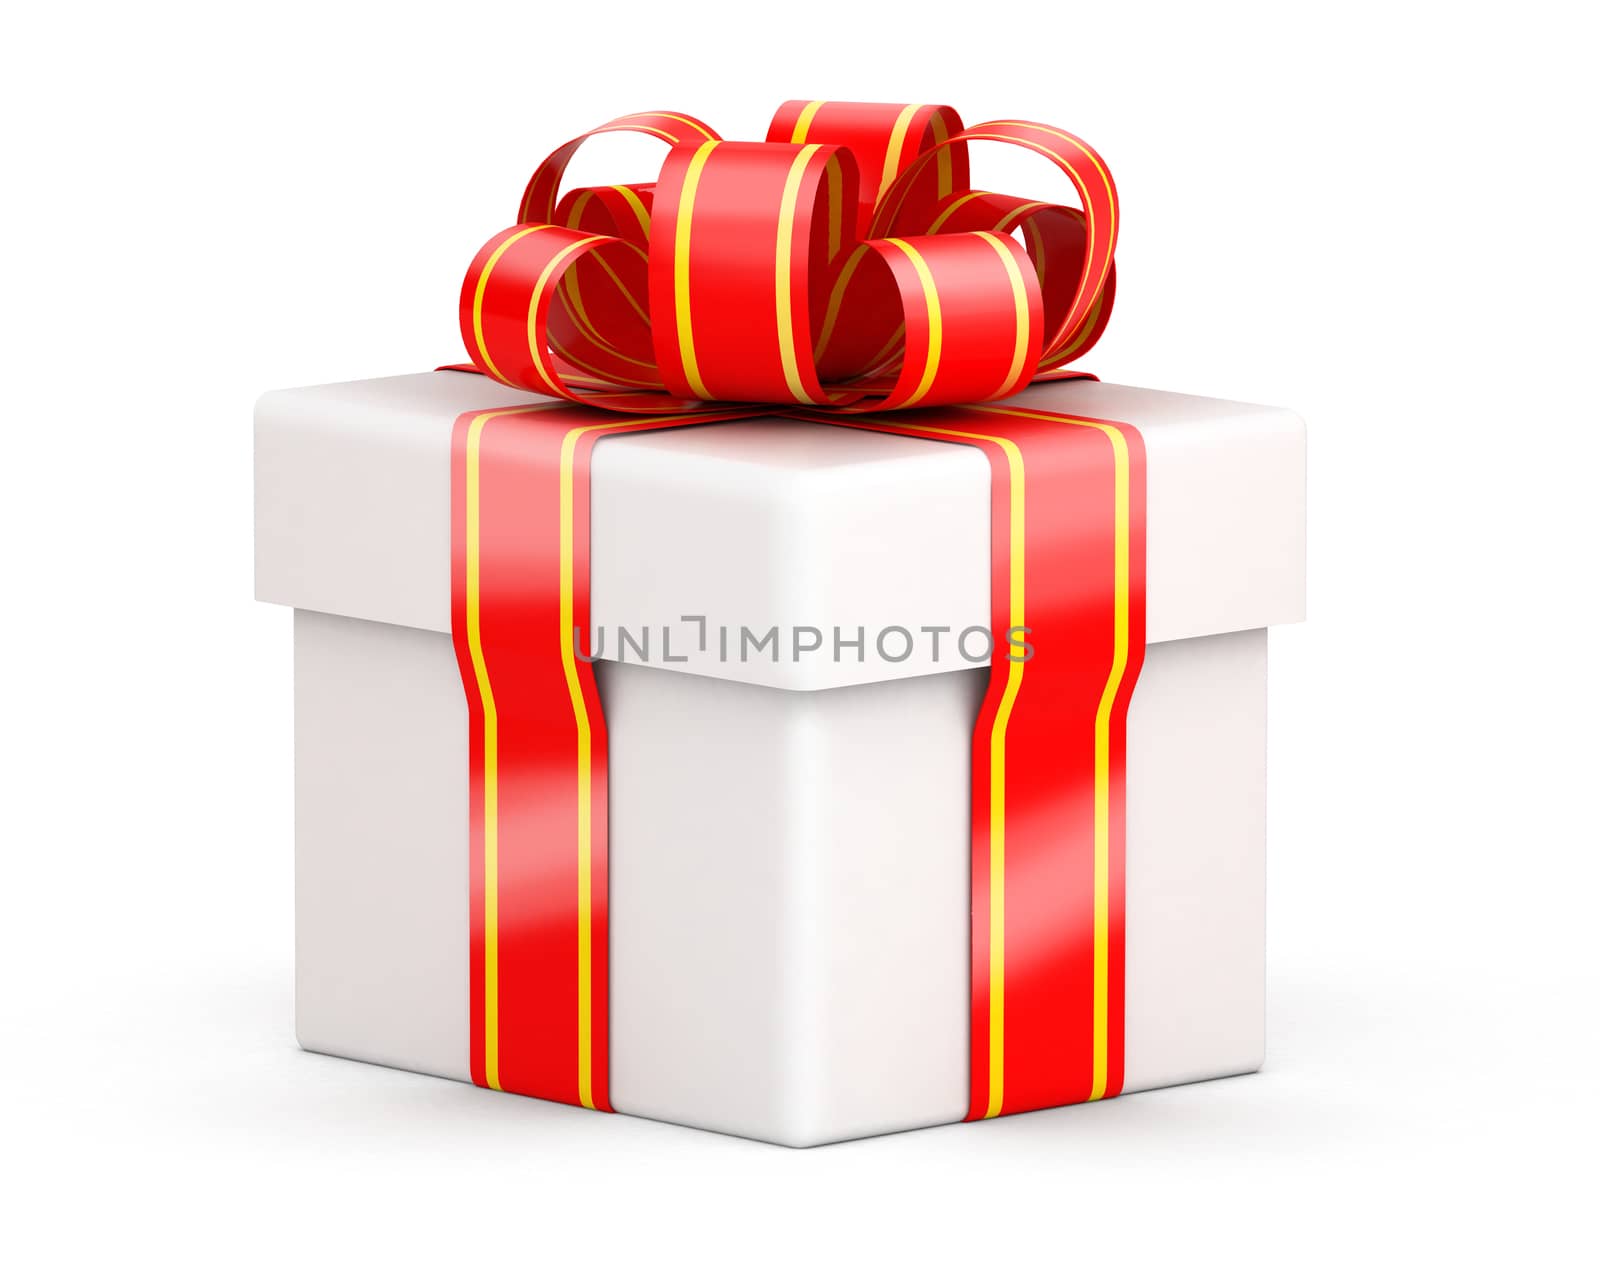 White gift box by iunewind